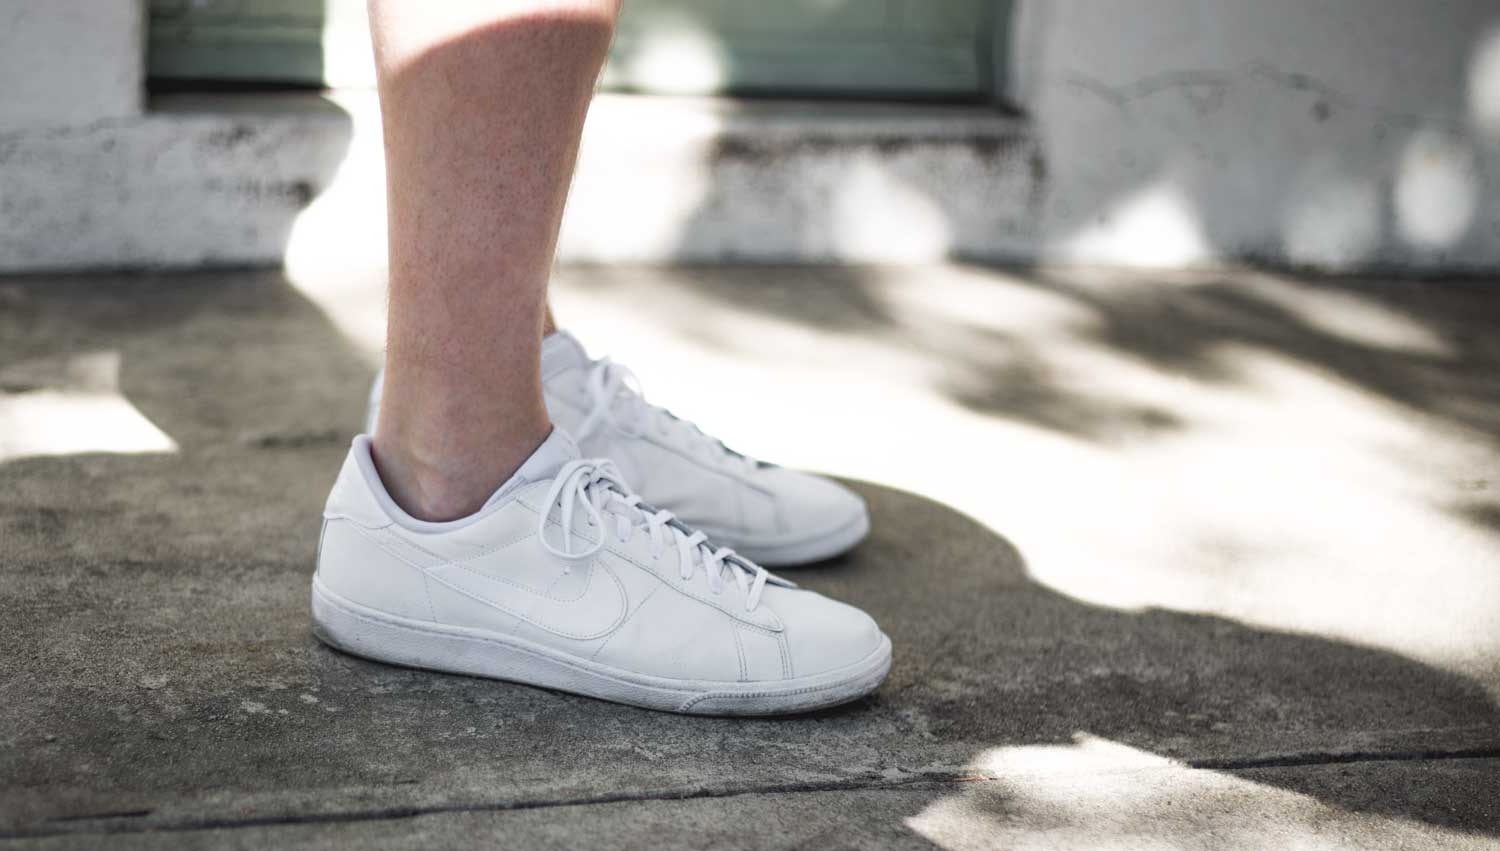 nike tennis classic   white leather sneaker